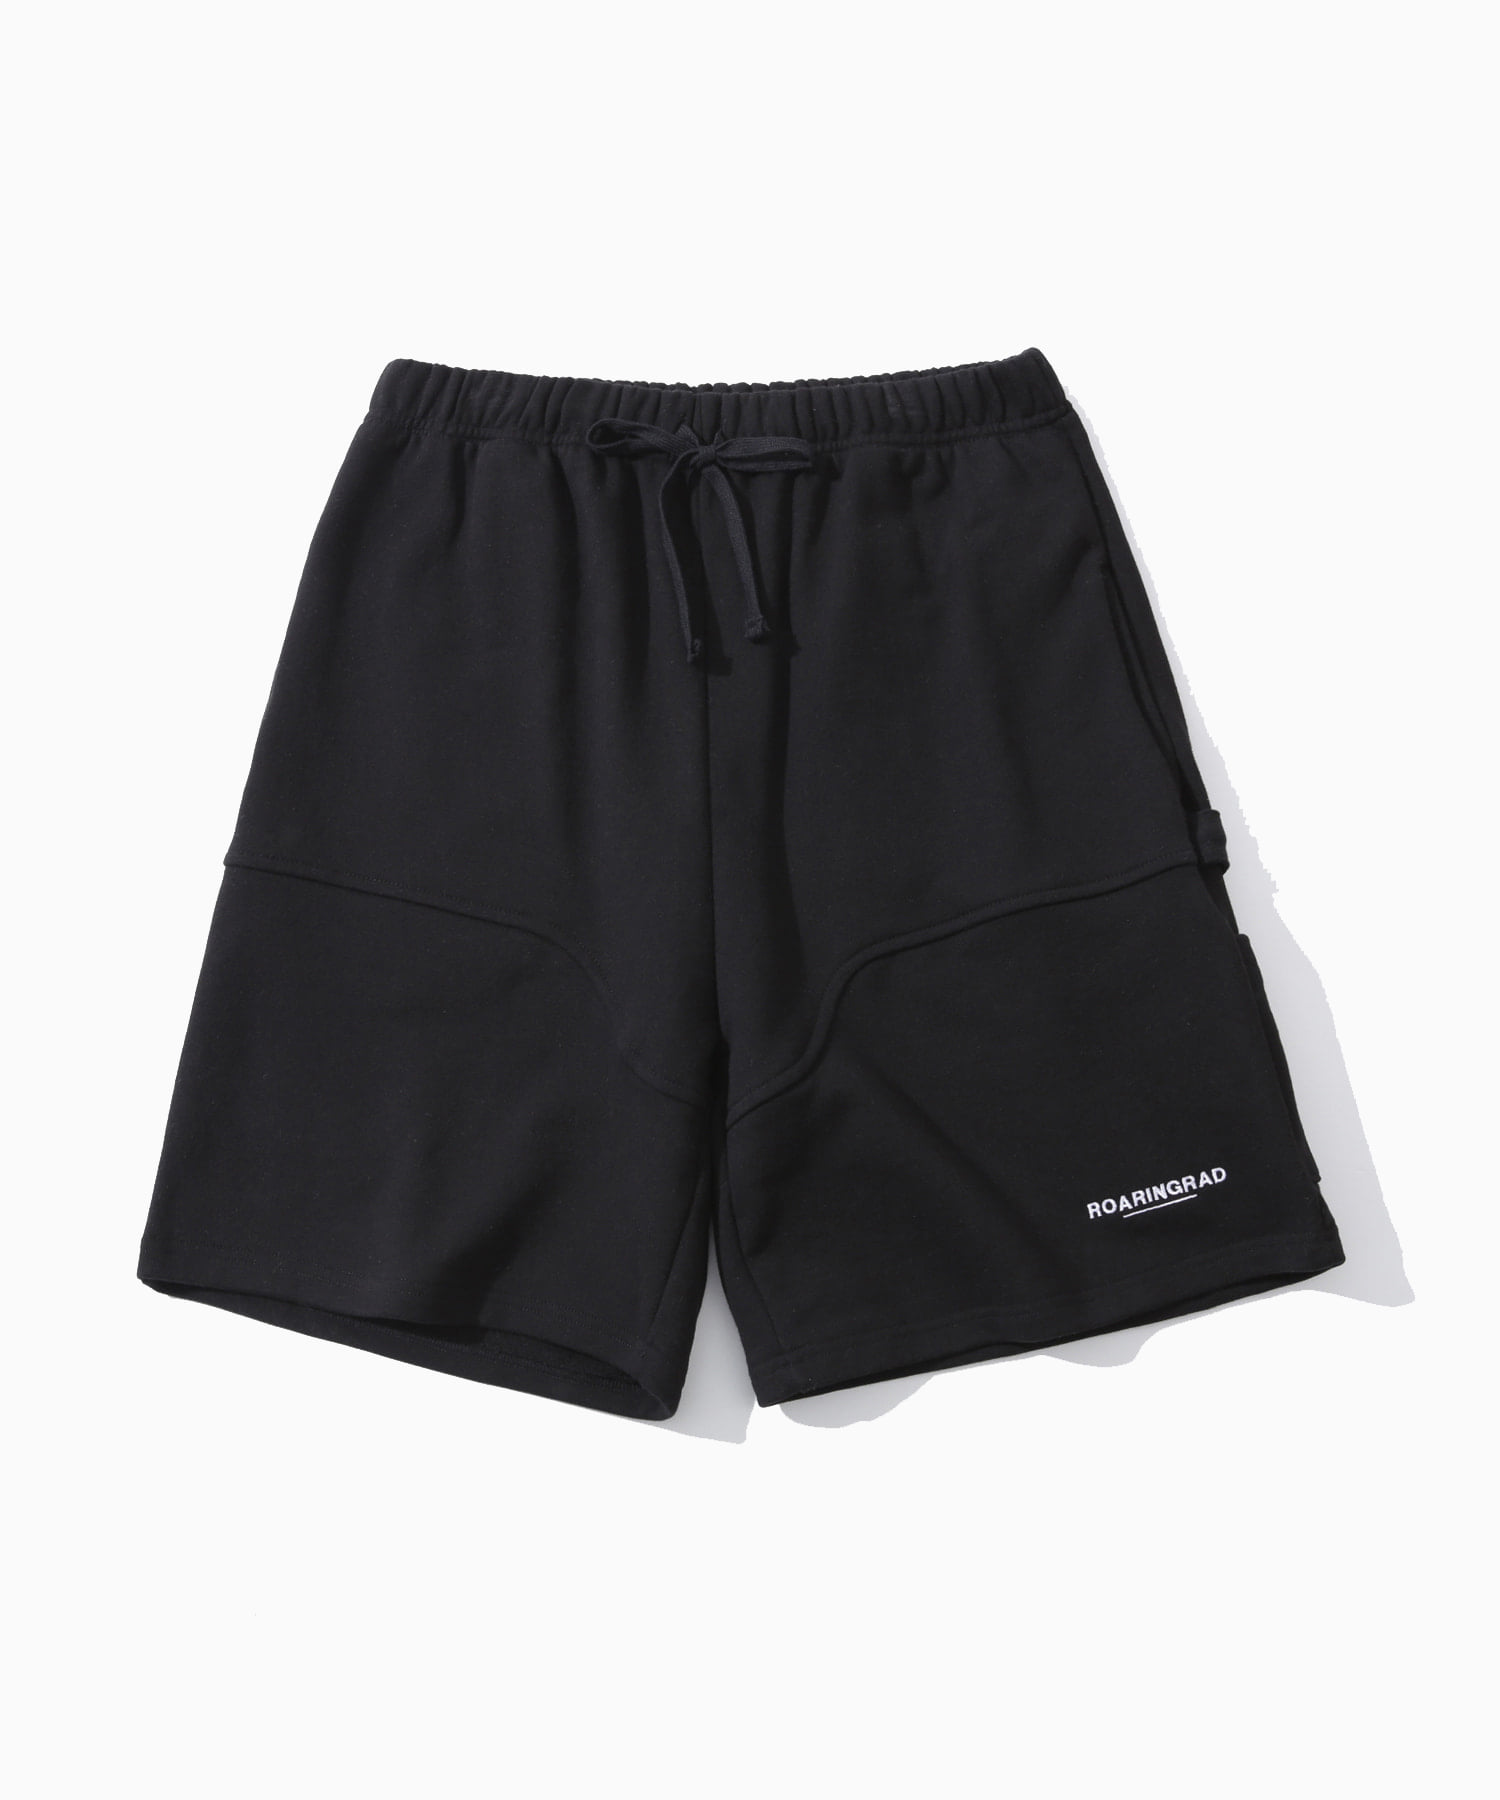 pocket sweat half pants black - 로어링라드(ROARINGRAD)